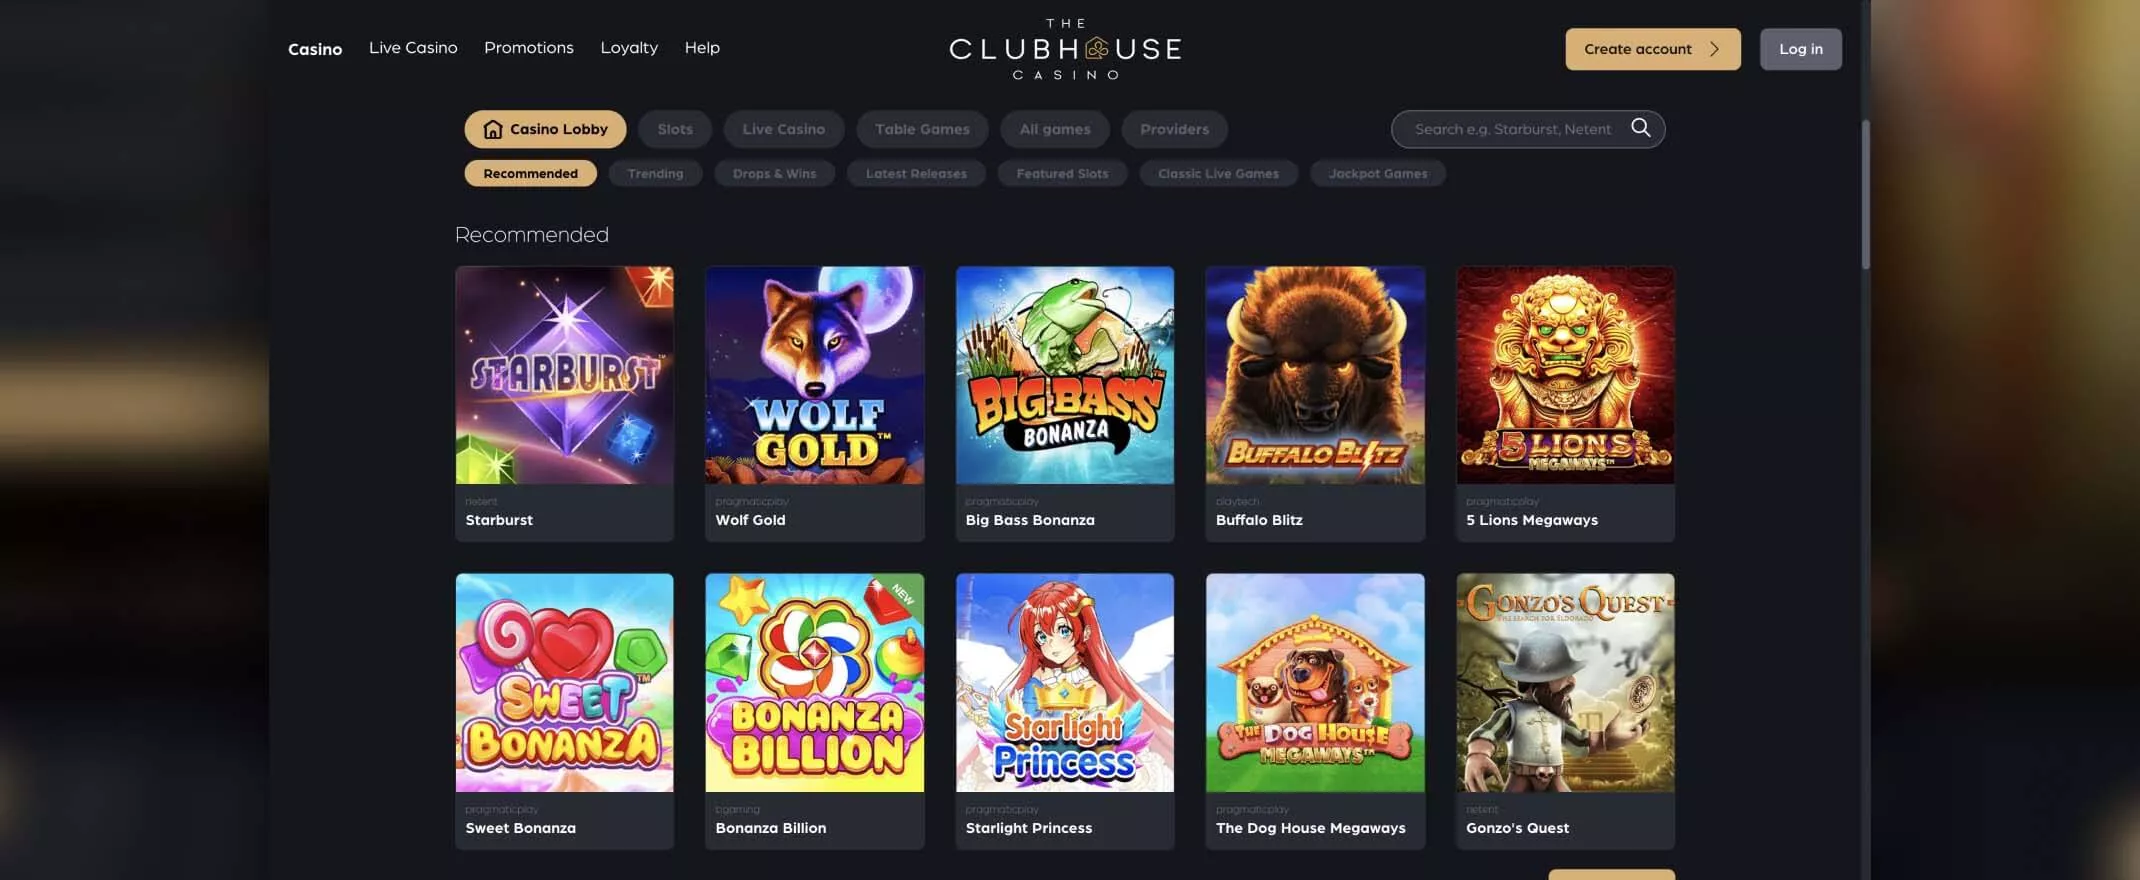 Clubhouse casino screenshot of games